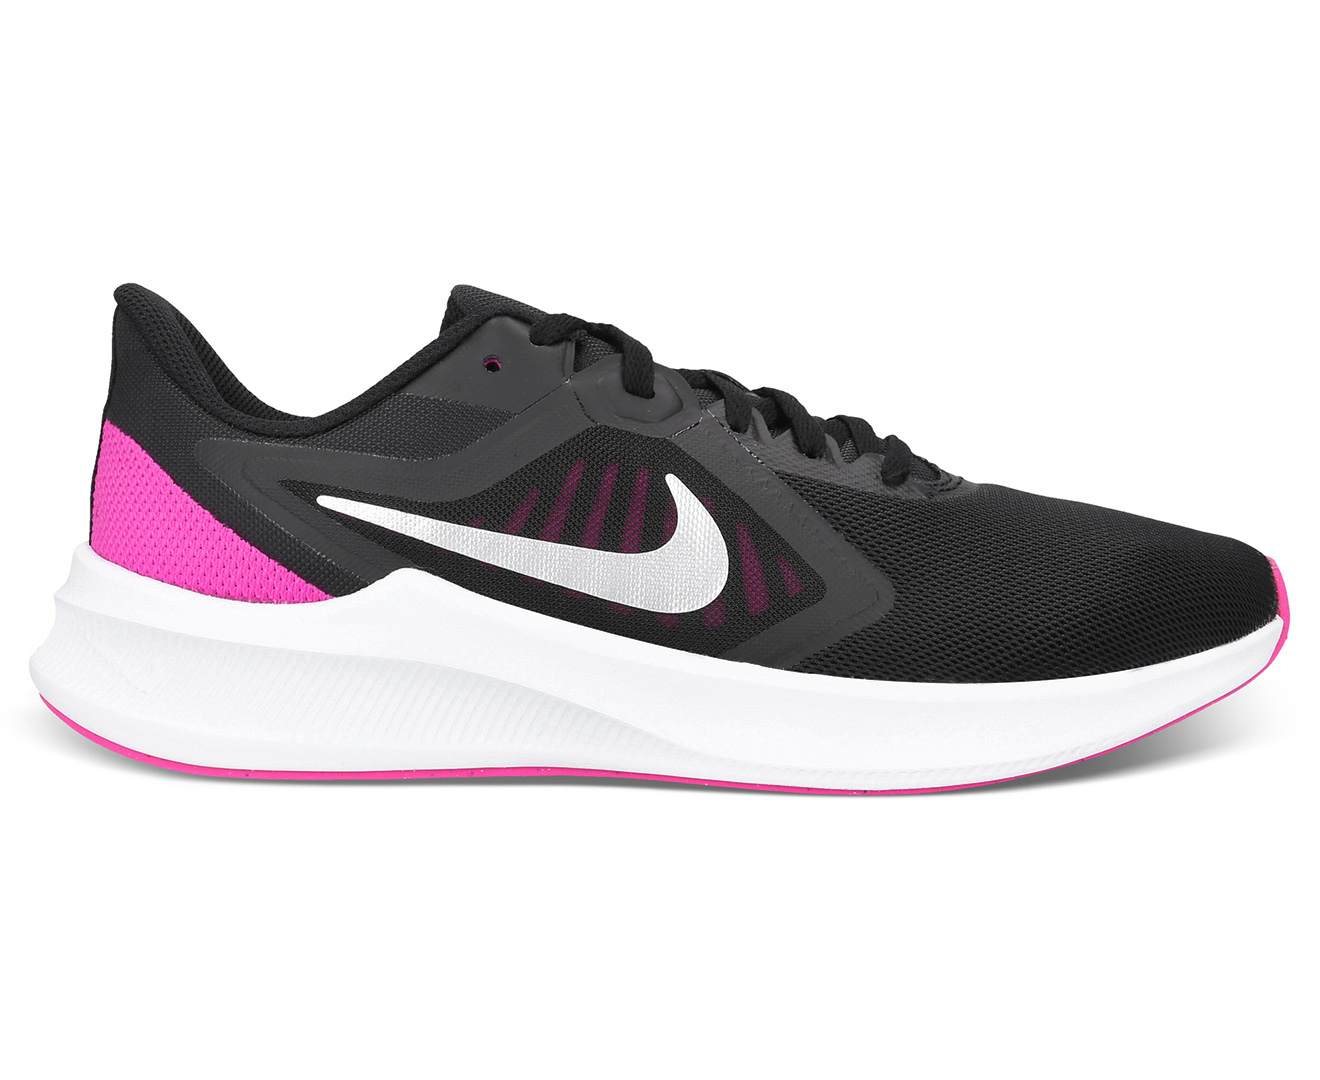 Nike Women's Downshifter 10 Running Shoes - Black/Metallic Silver/Pink ...